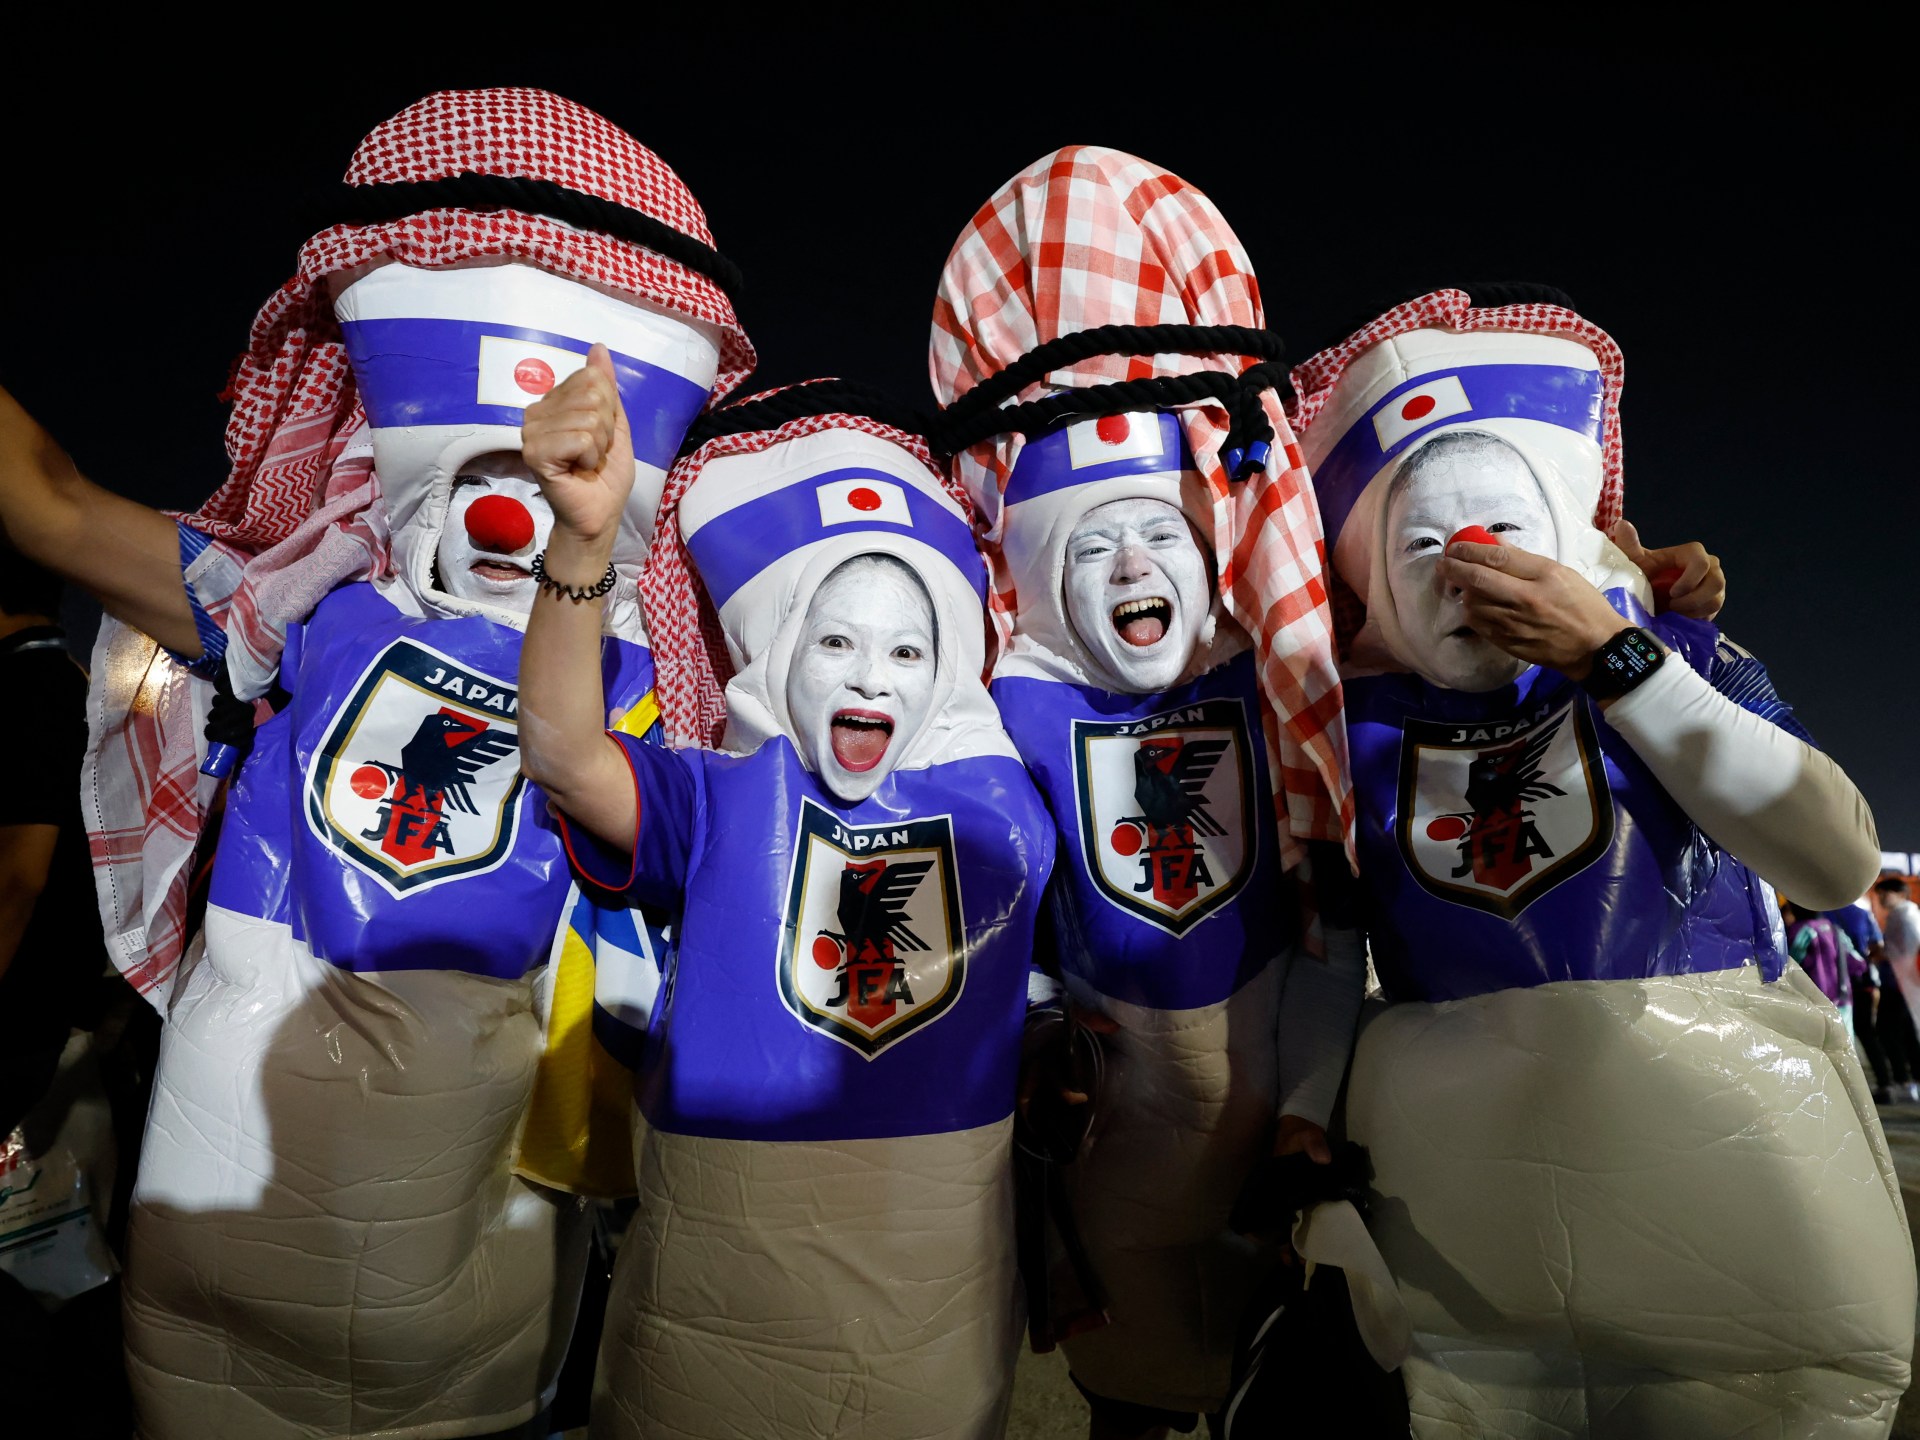 Japan fans in joyous disbelief after Germany shocker at World Cup